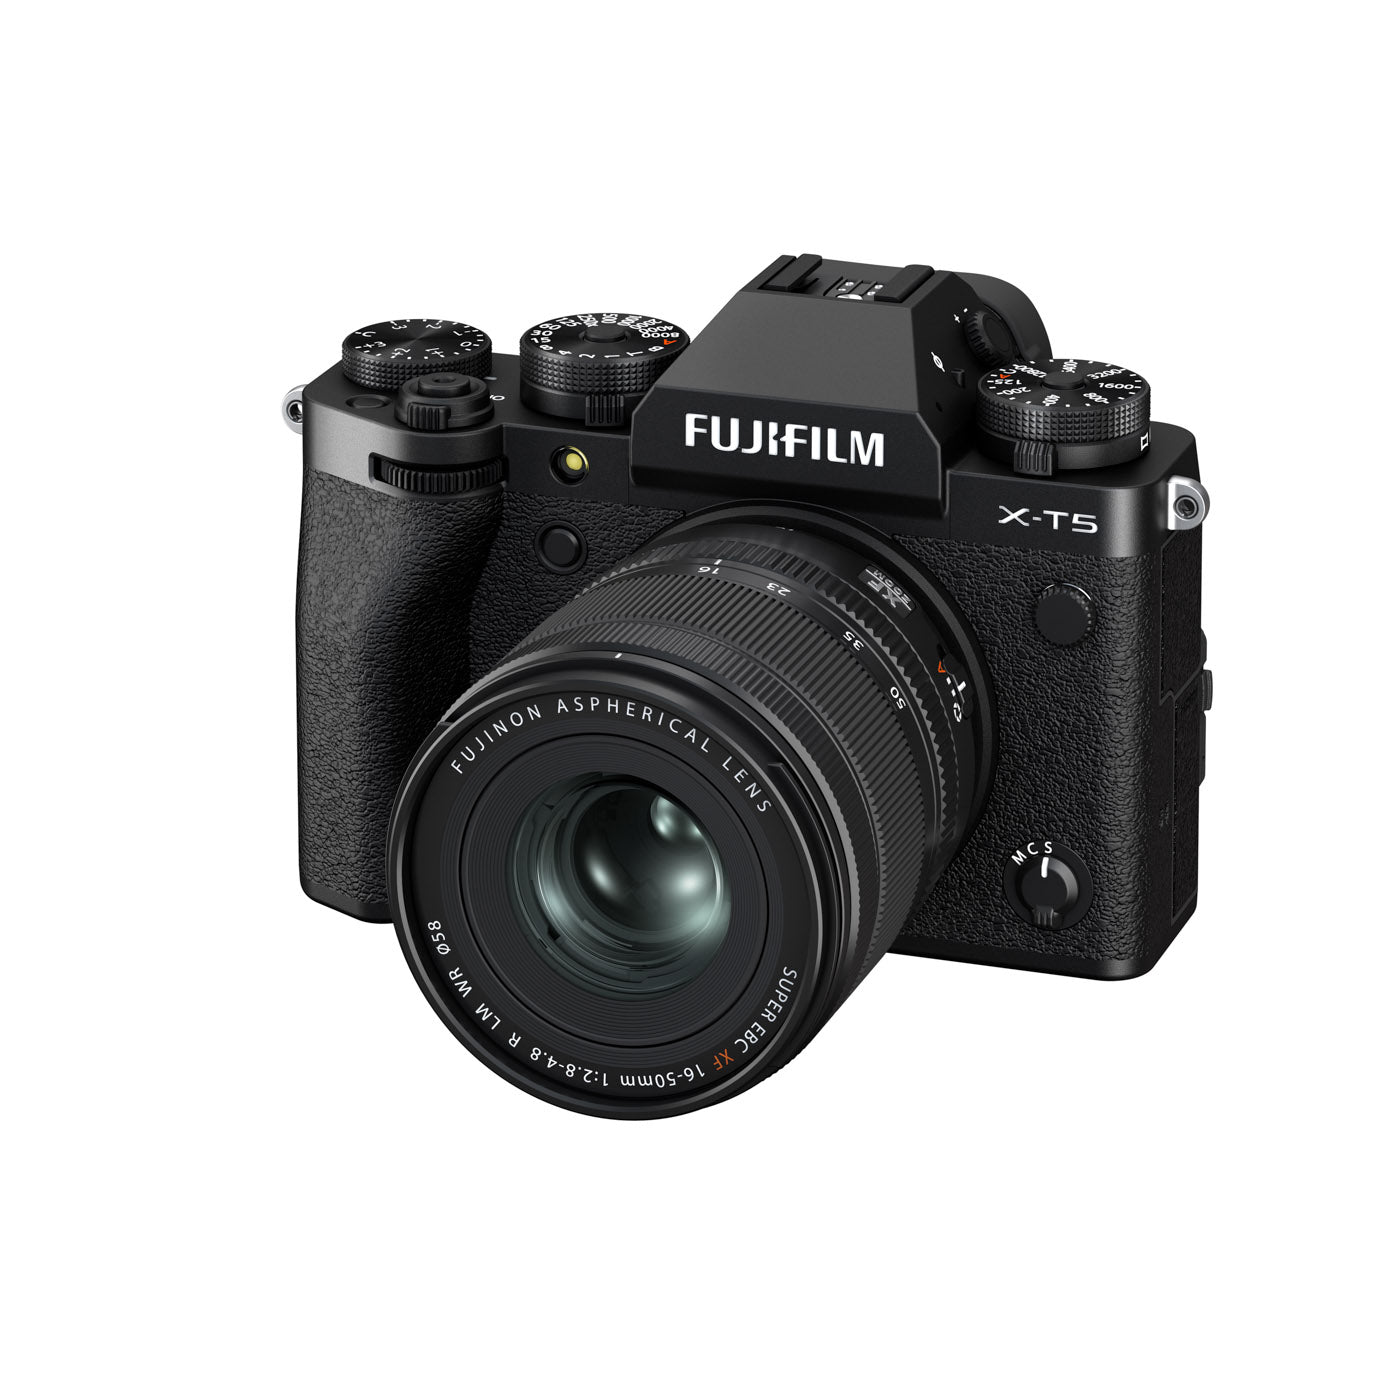 Fujifilm X-T5 Kit with XF 16-50mm Lens - Black